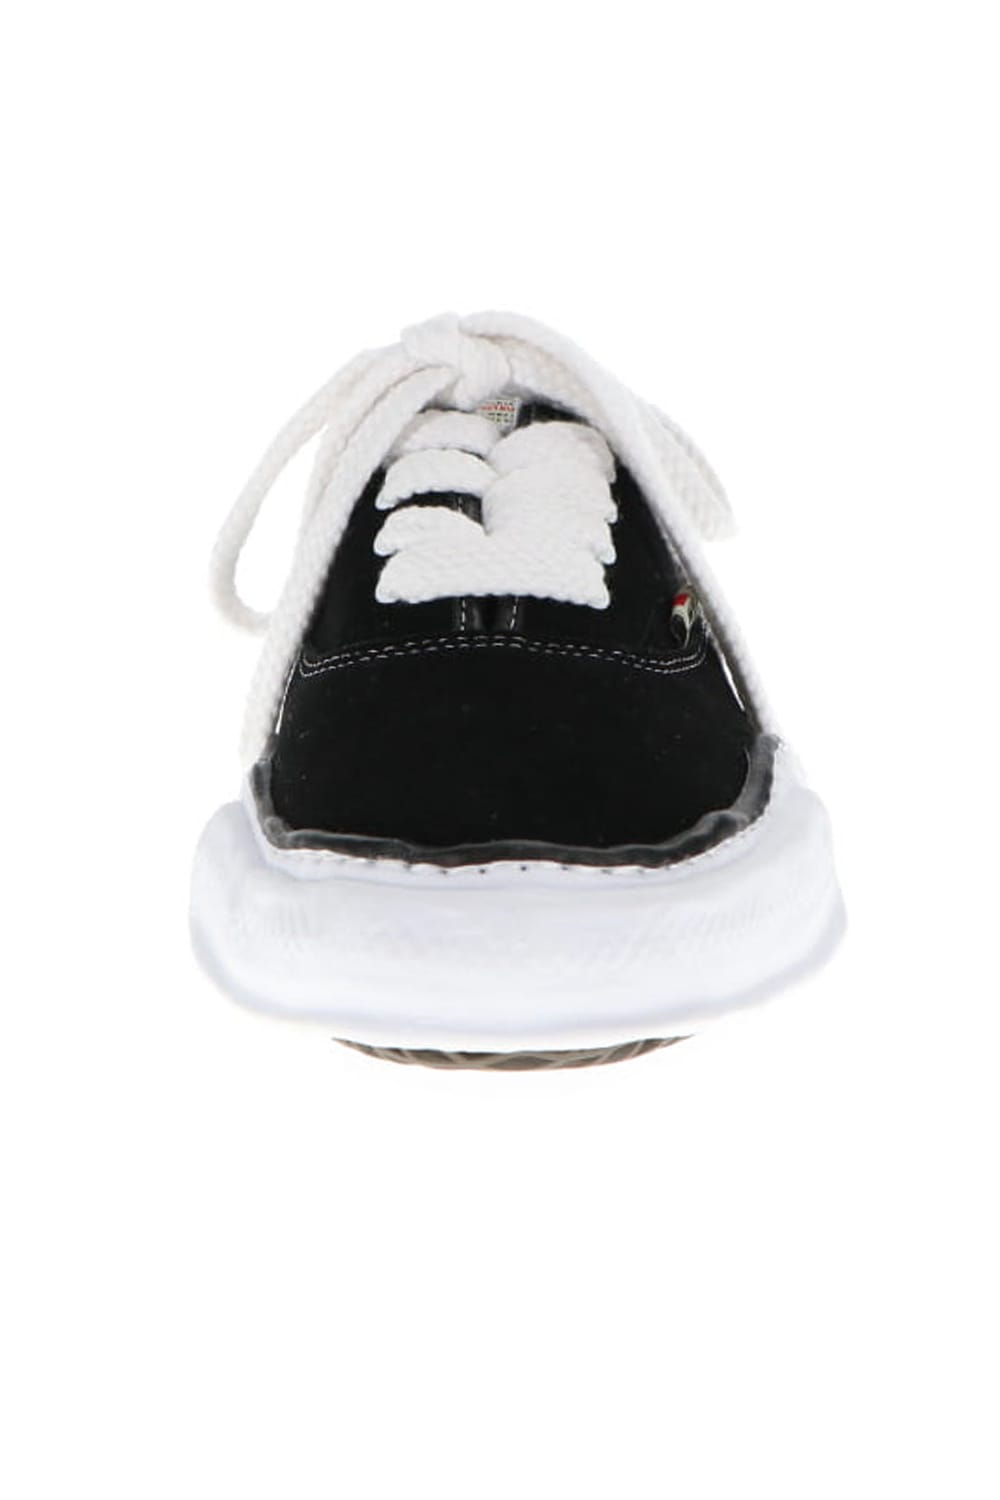 -BAKER- Original sole suede leather Low-Top sneakers Black